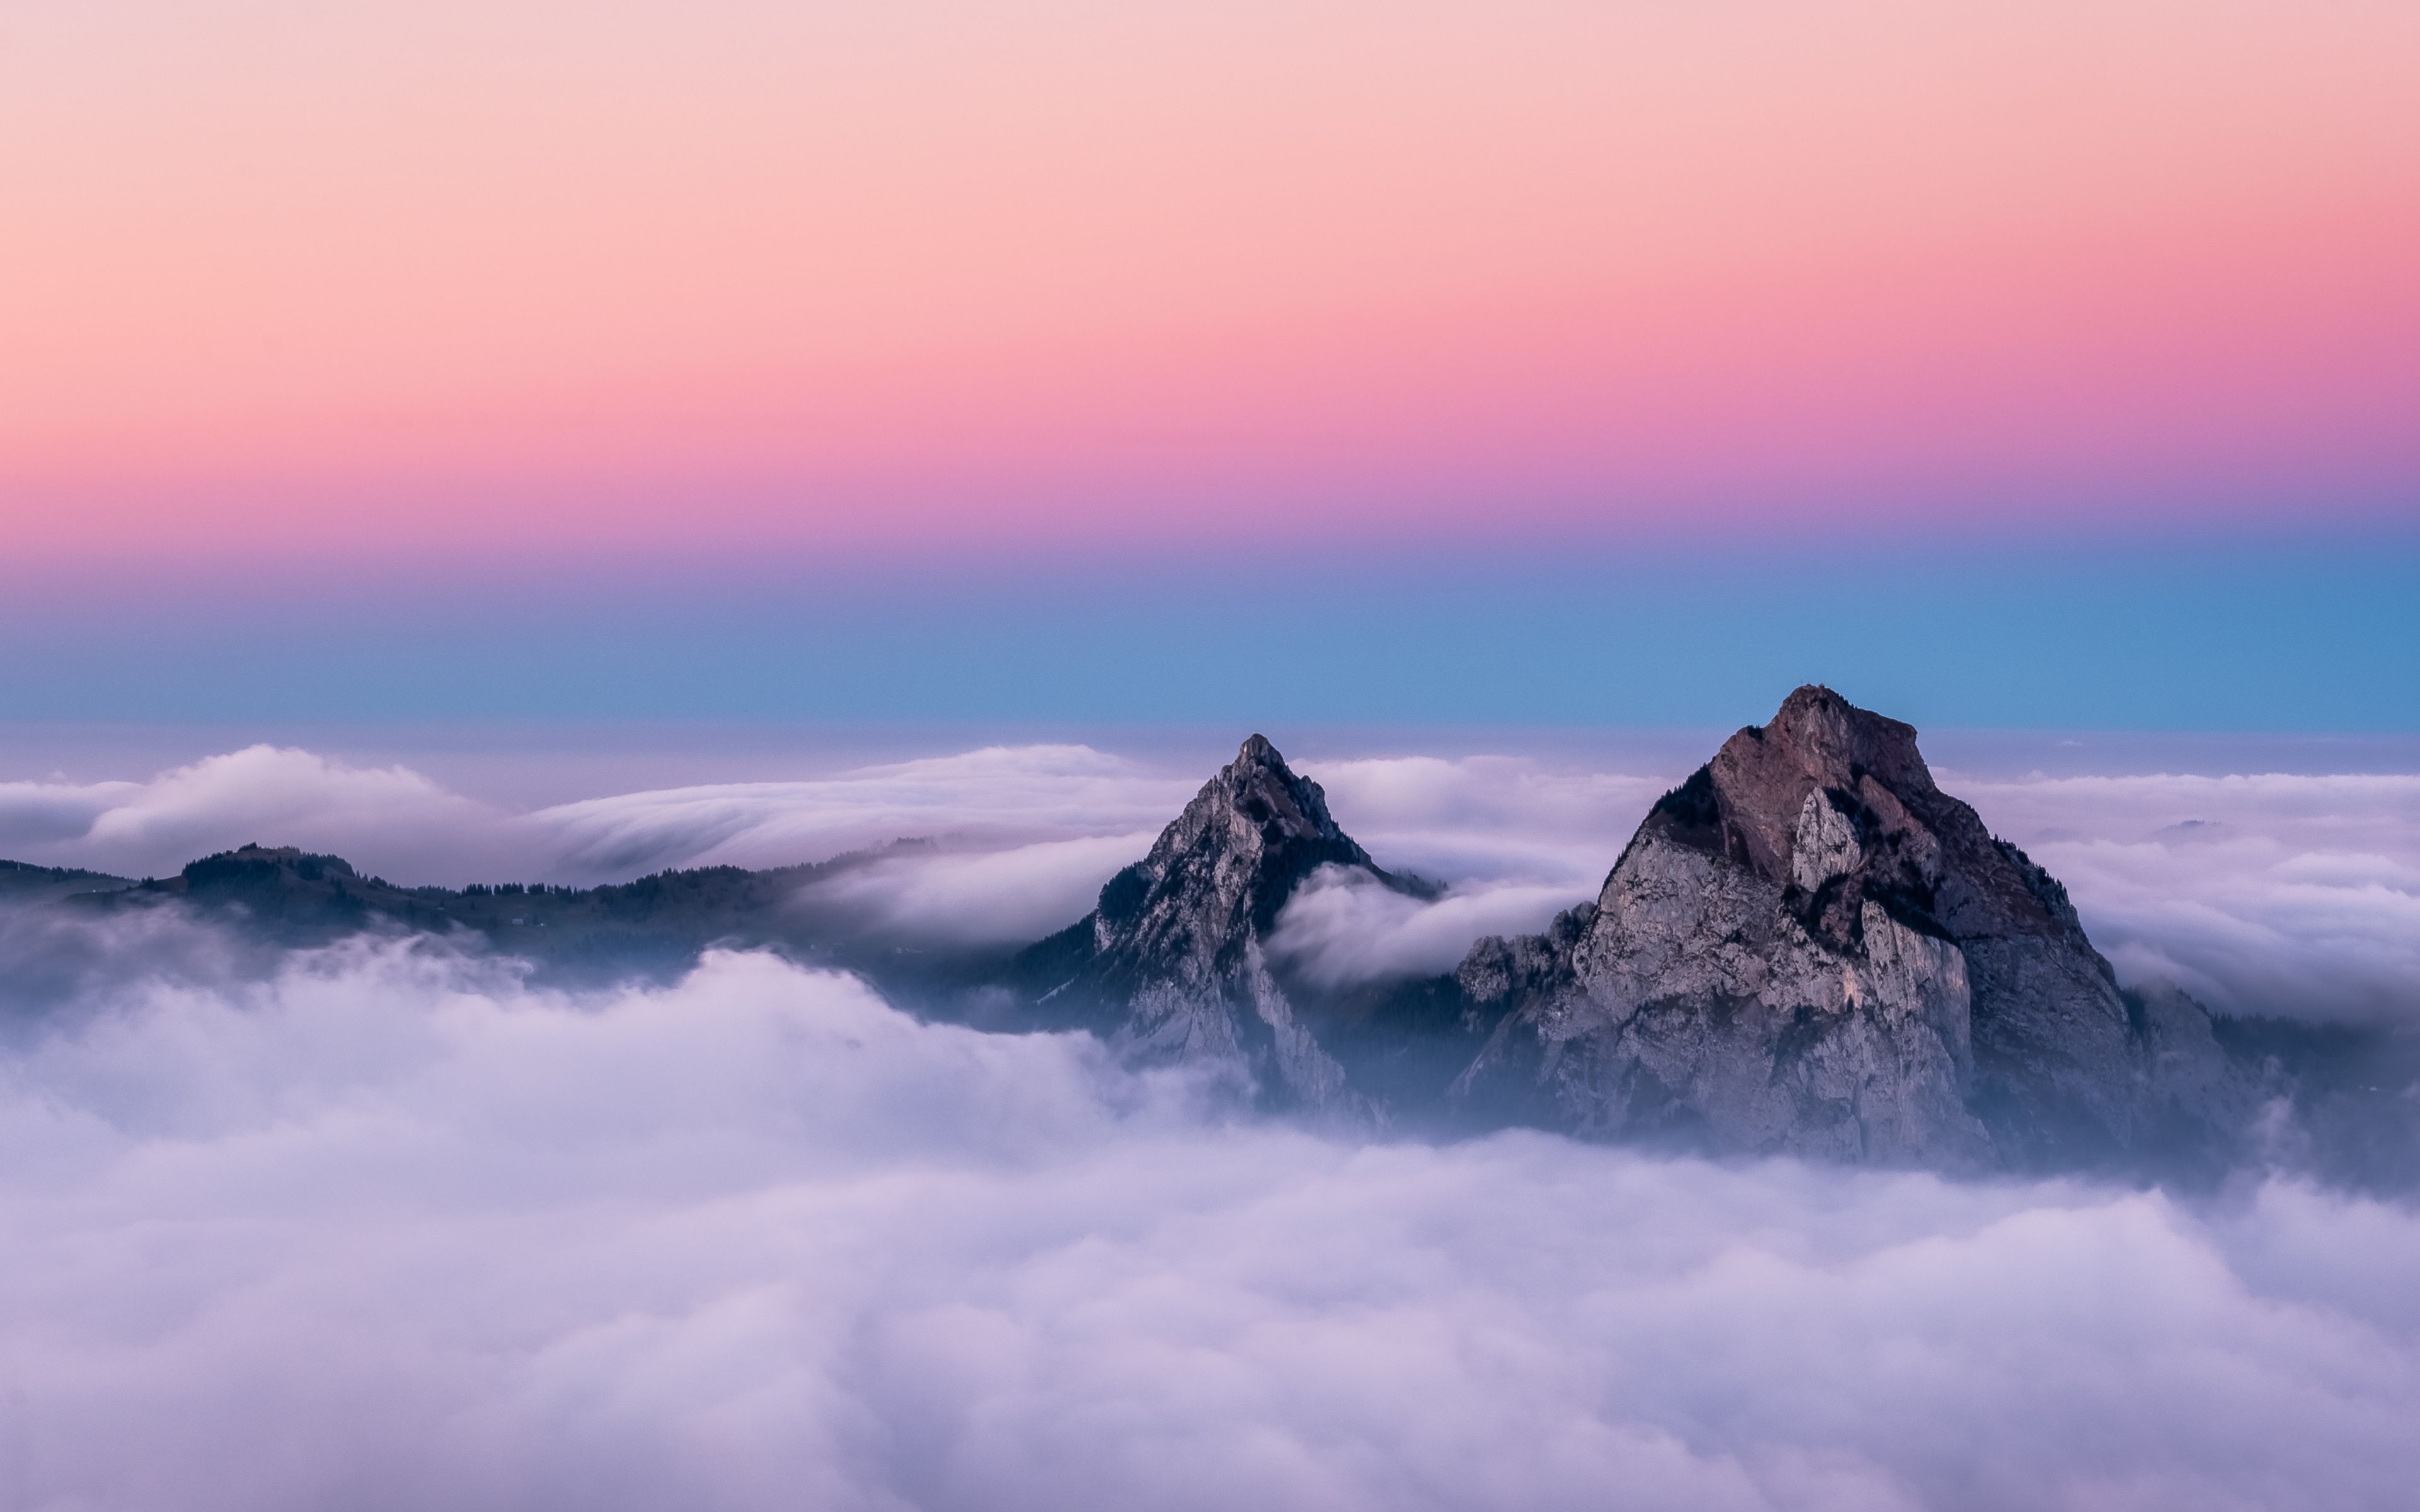 Download Mountains, peaks, clouds, pink sky wallpaper, 3840x 4K Ultra HD 16: Widescreen